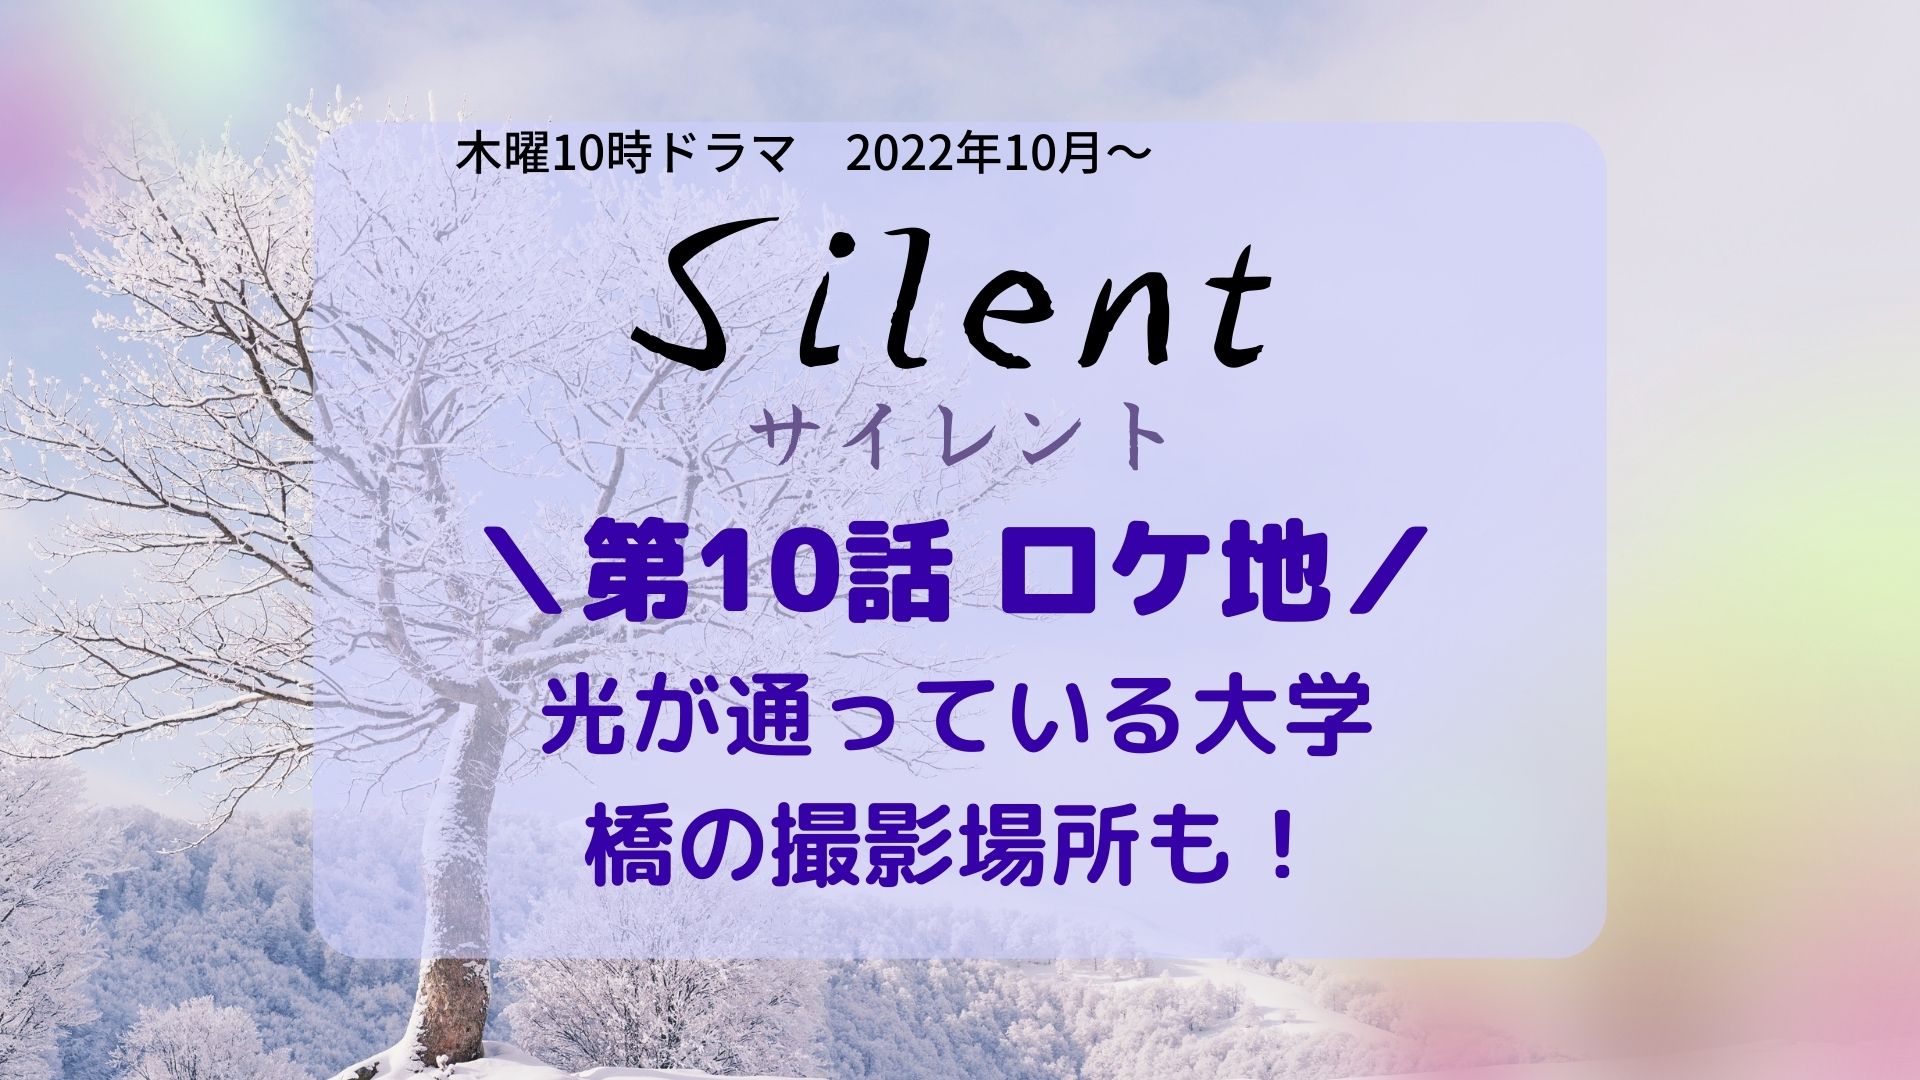 Silent (サイレント)10話ロケ地